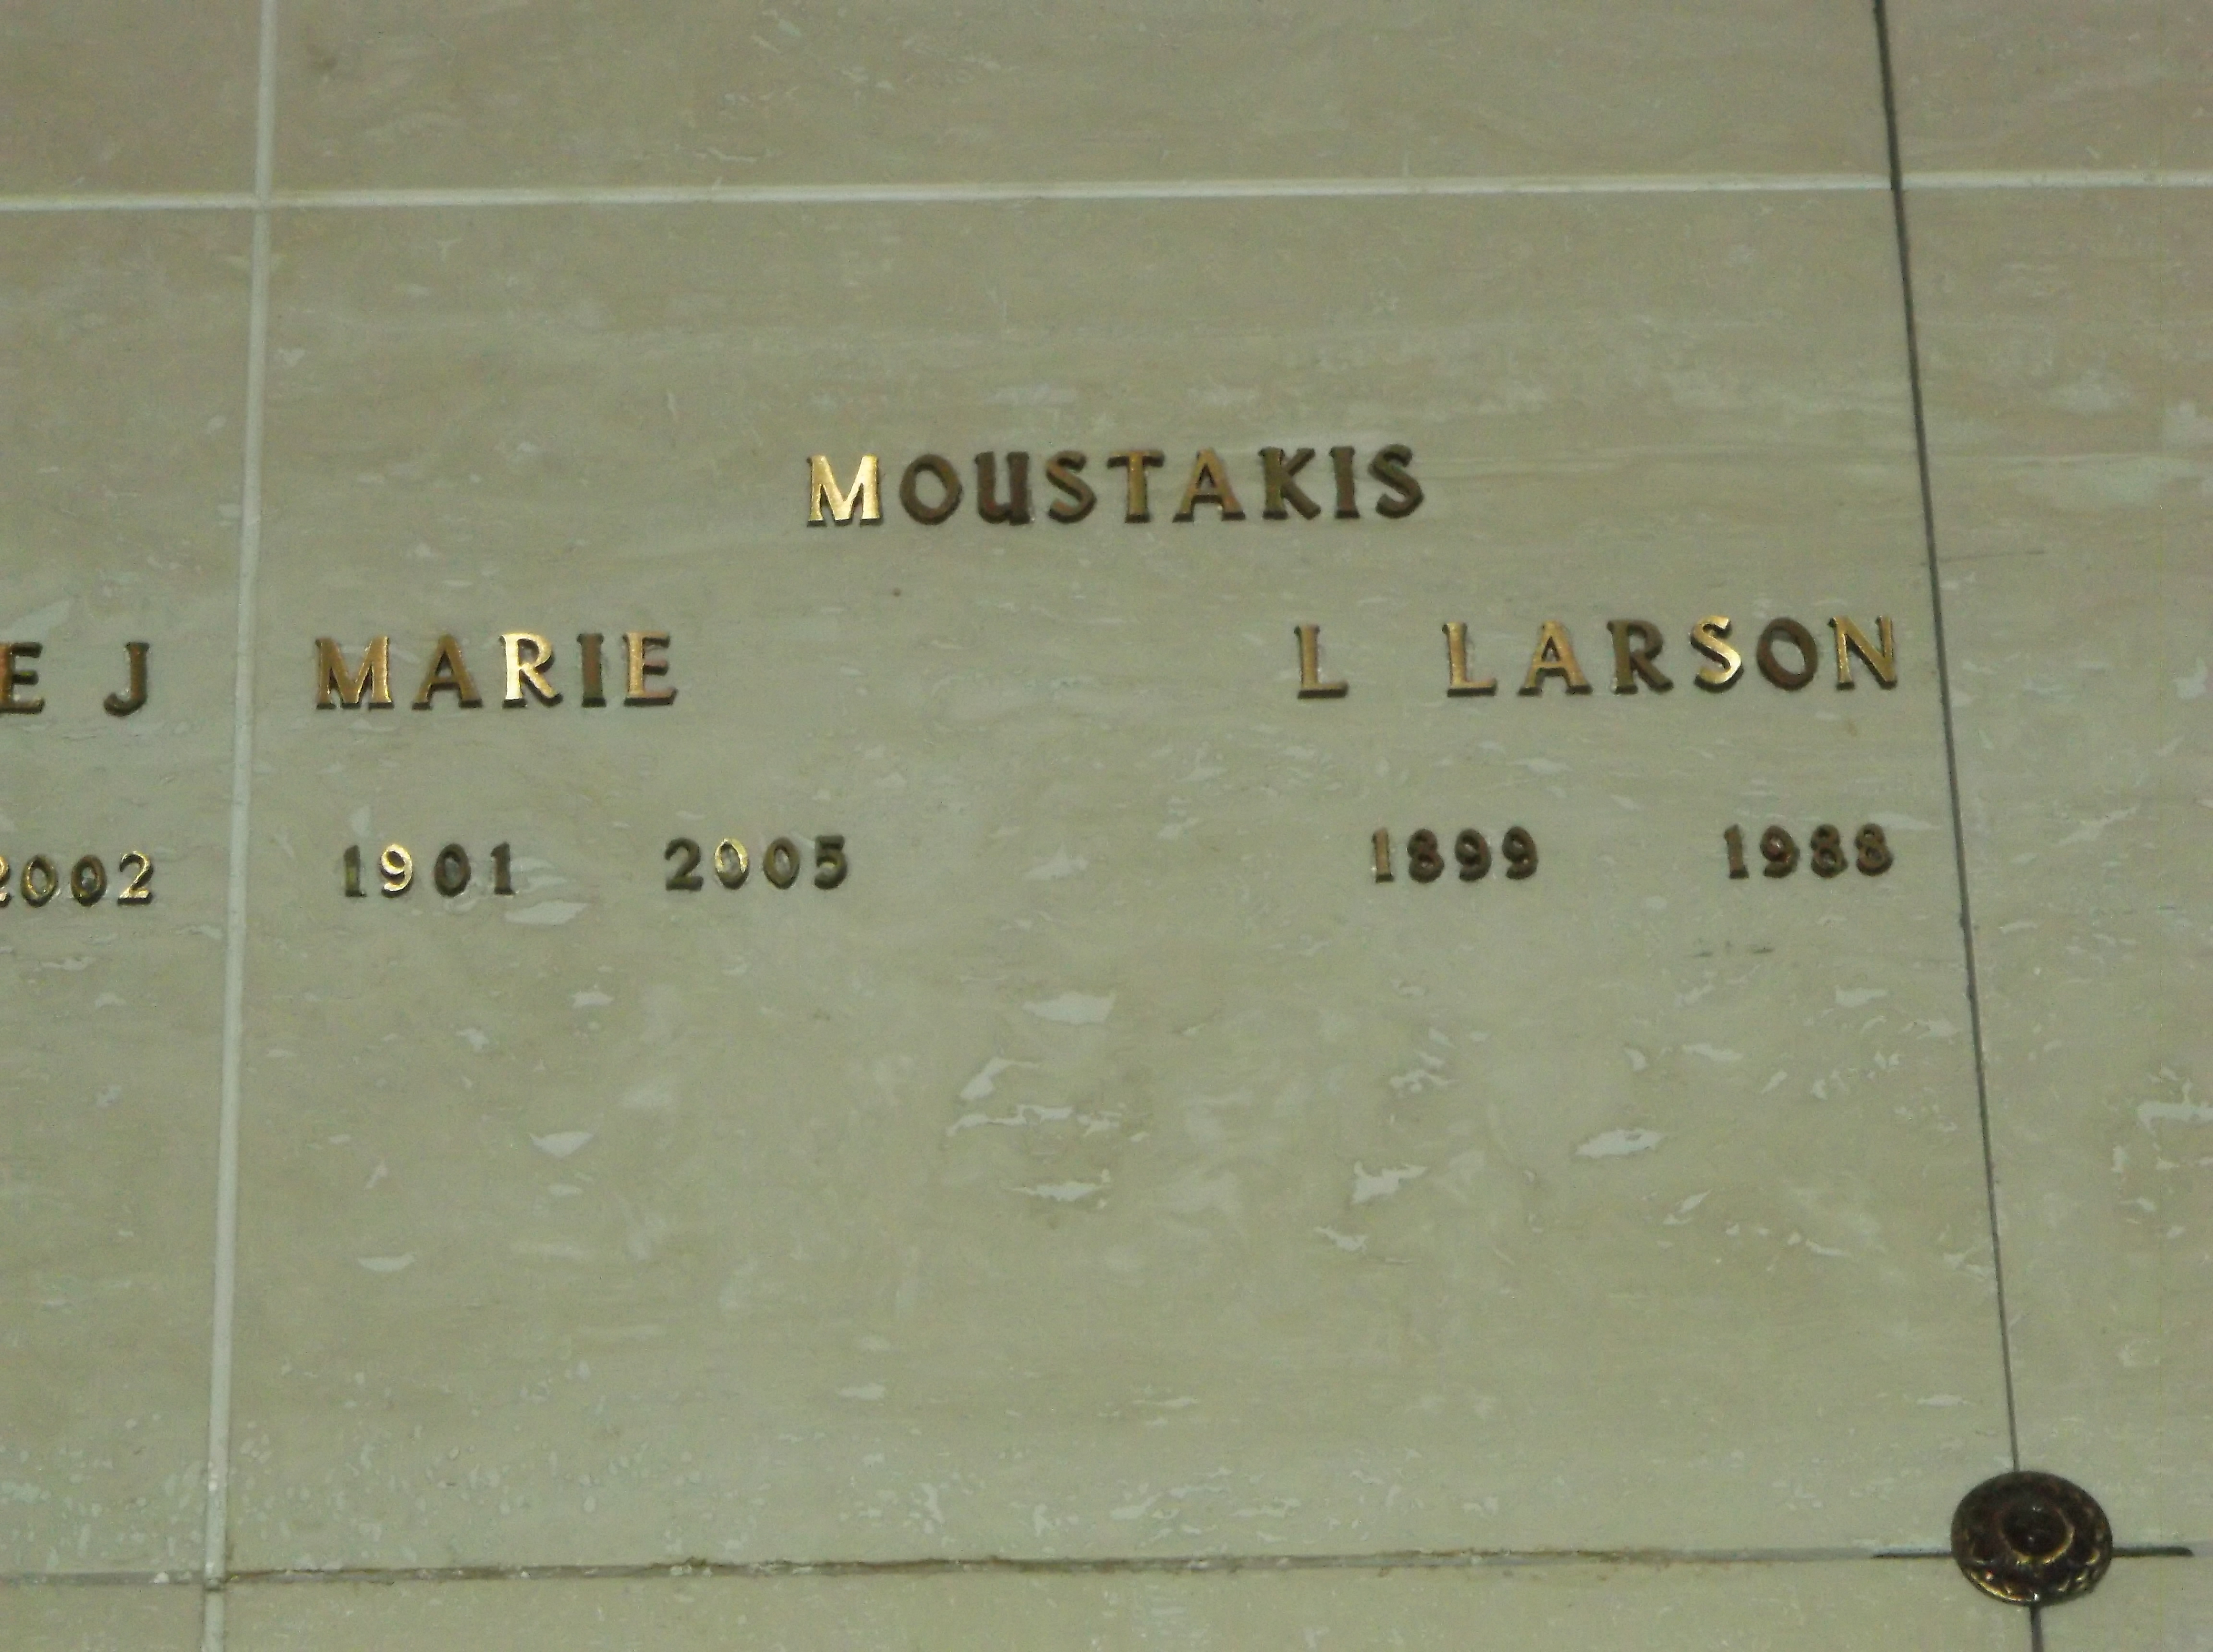 Marie Moustakis